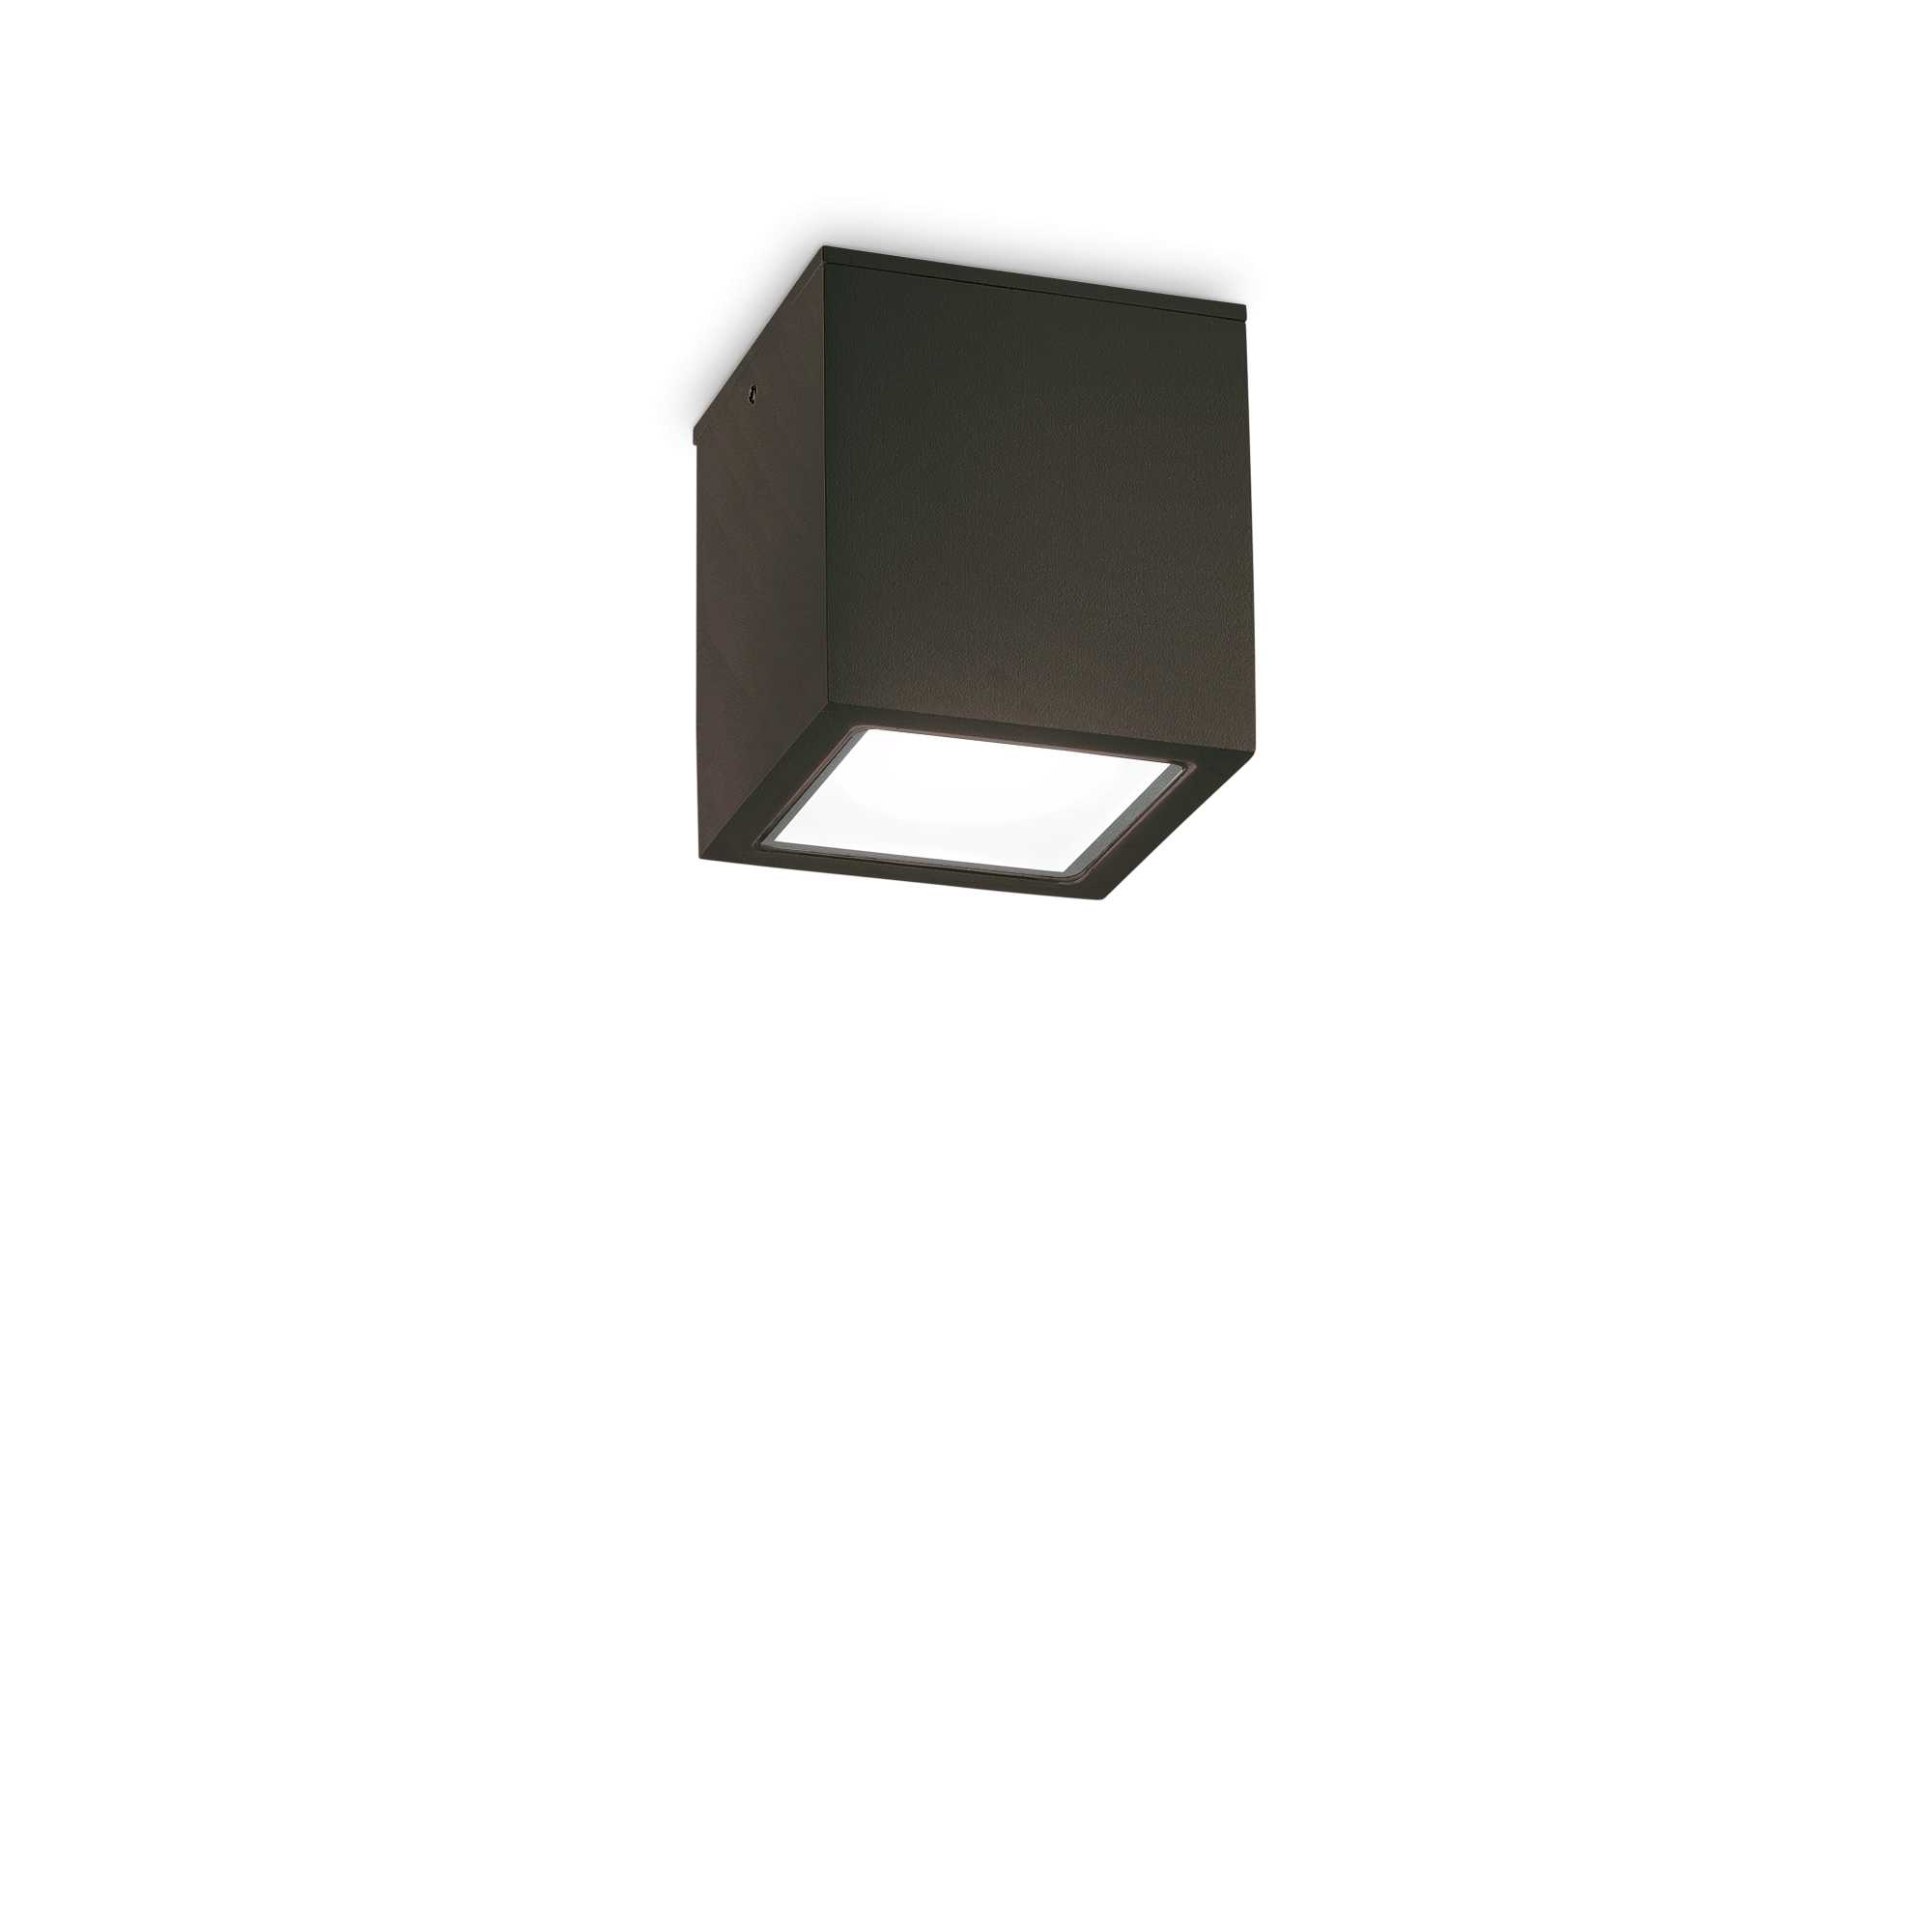 AD hotelska oprema Vanjska stropna lampa Techo pl1 mala- Crne boje slika proizvoda